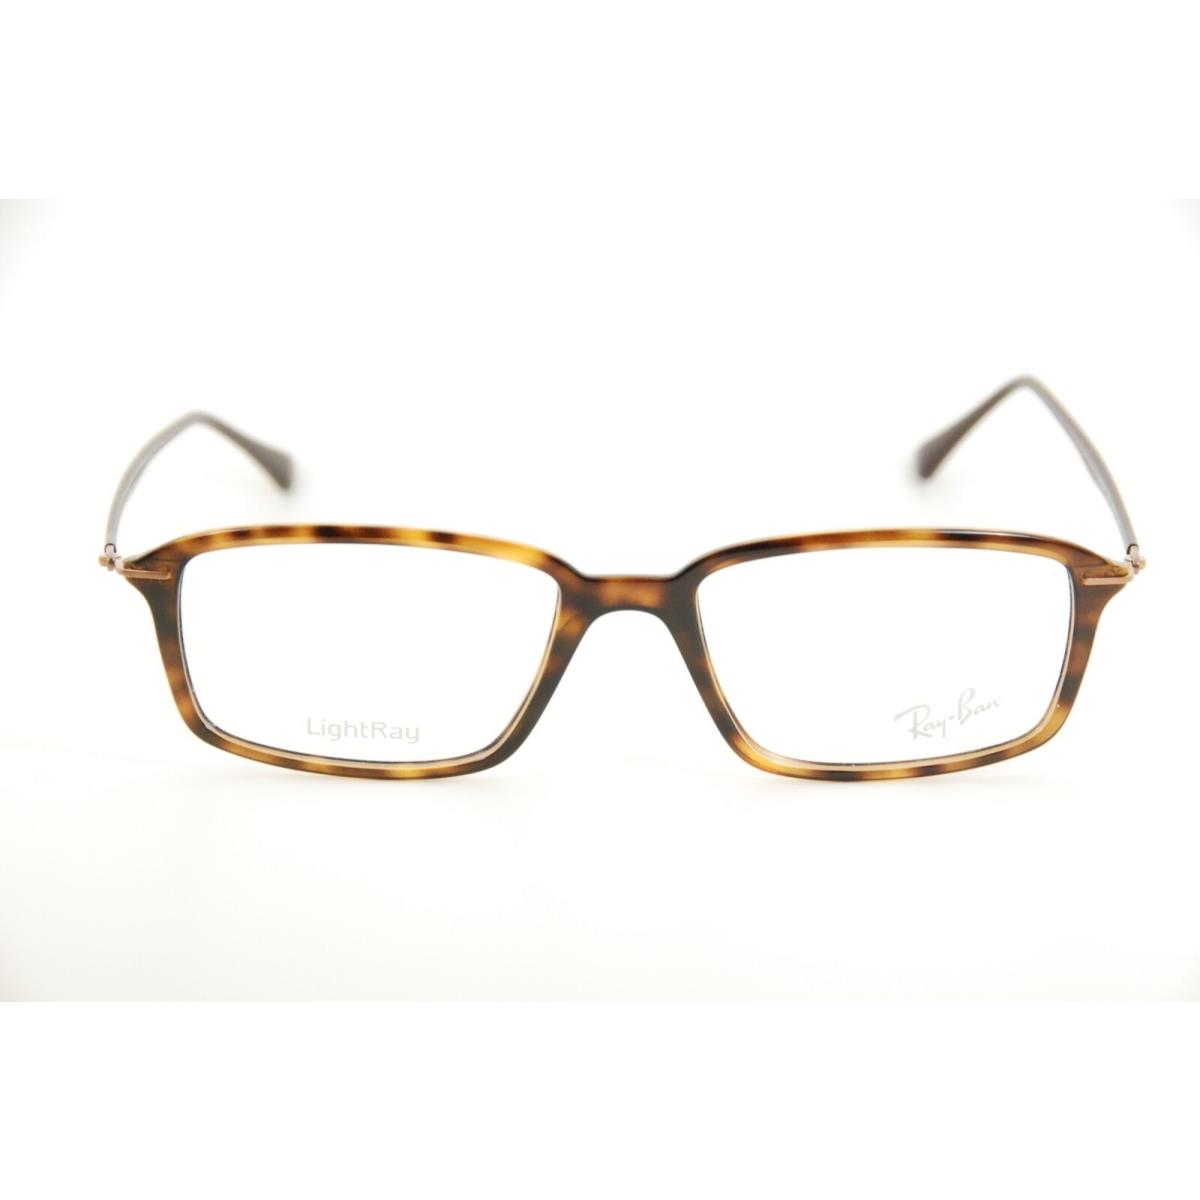 Ray-ban Ray Ban 7019 2301 Havana/brown 53mm Light Ray Frames Eyeglasses ...